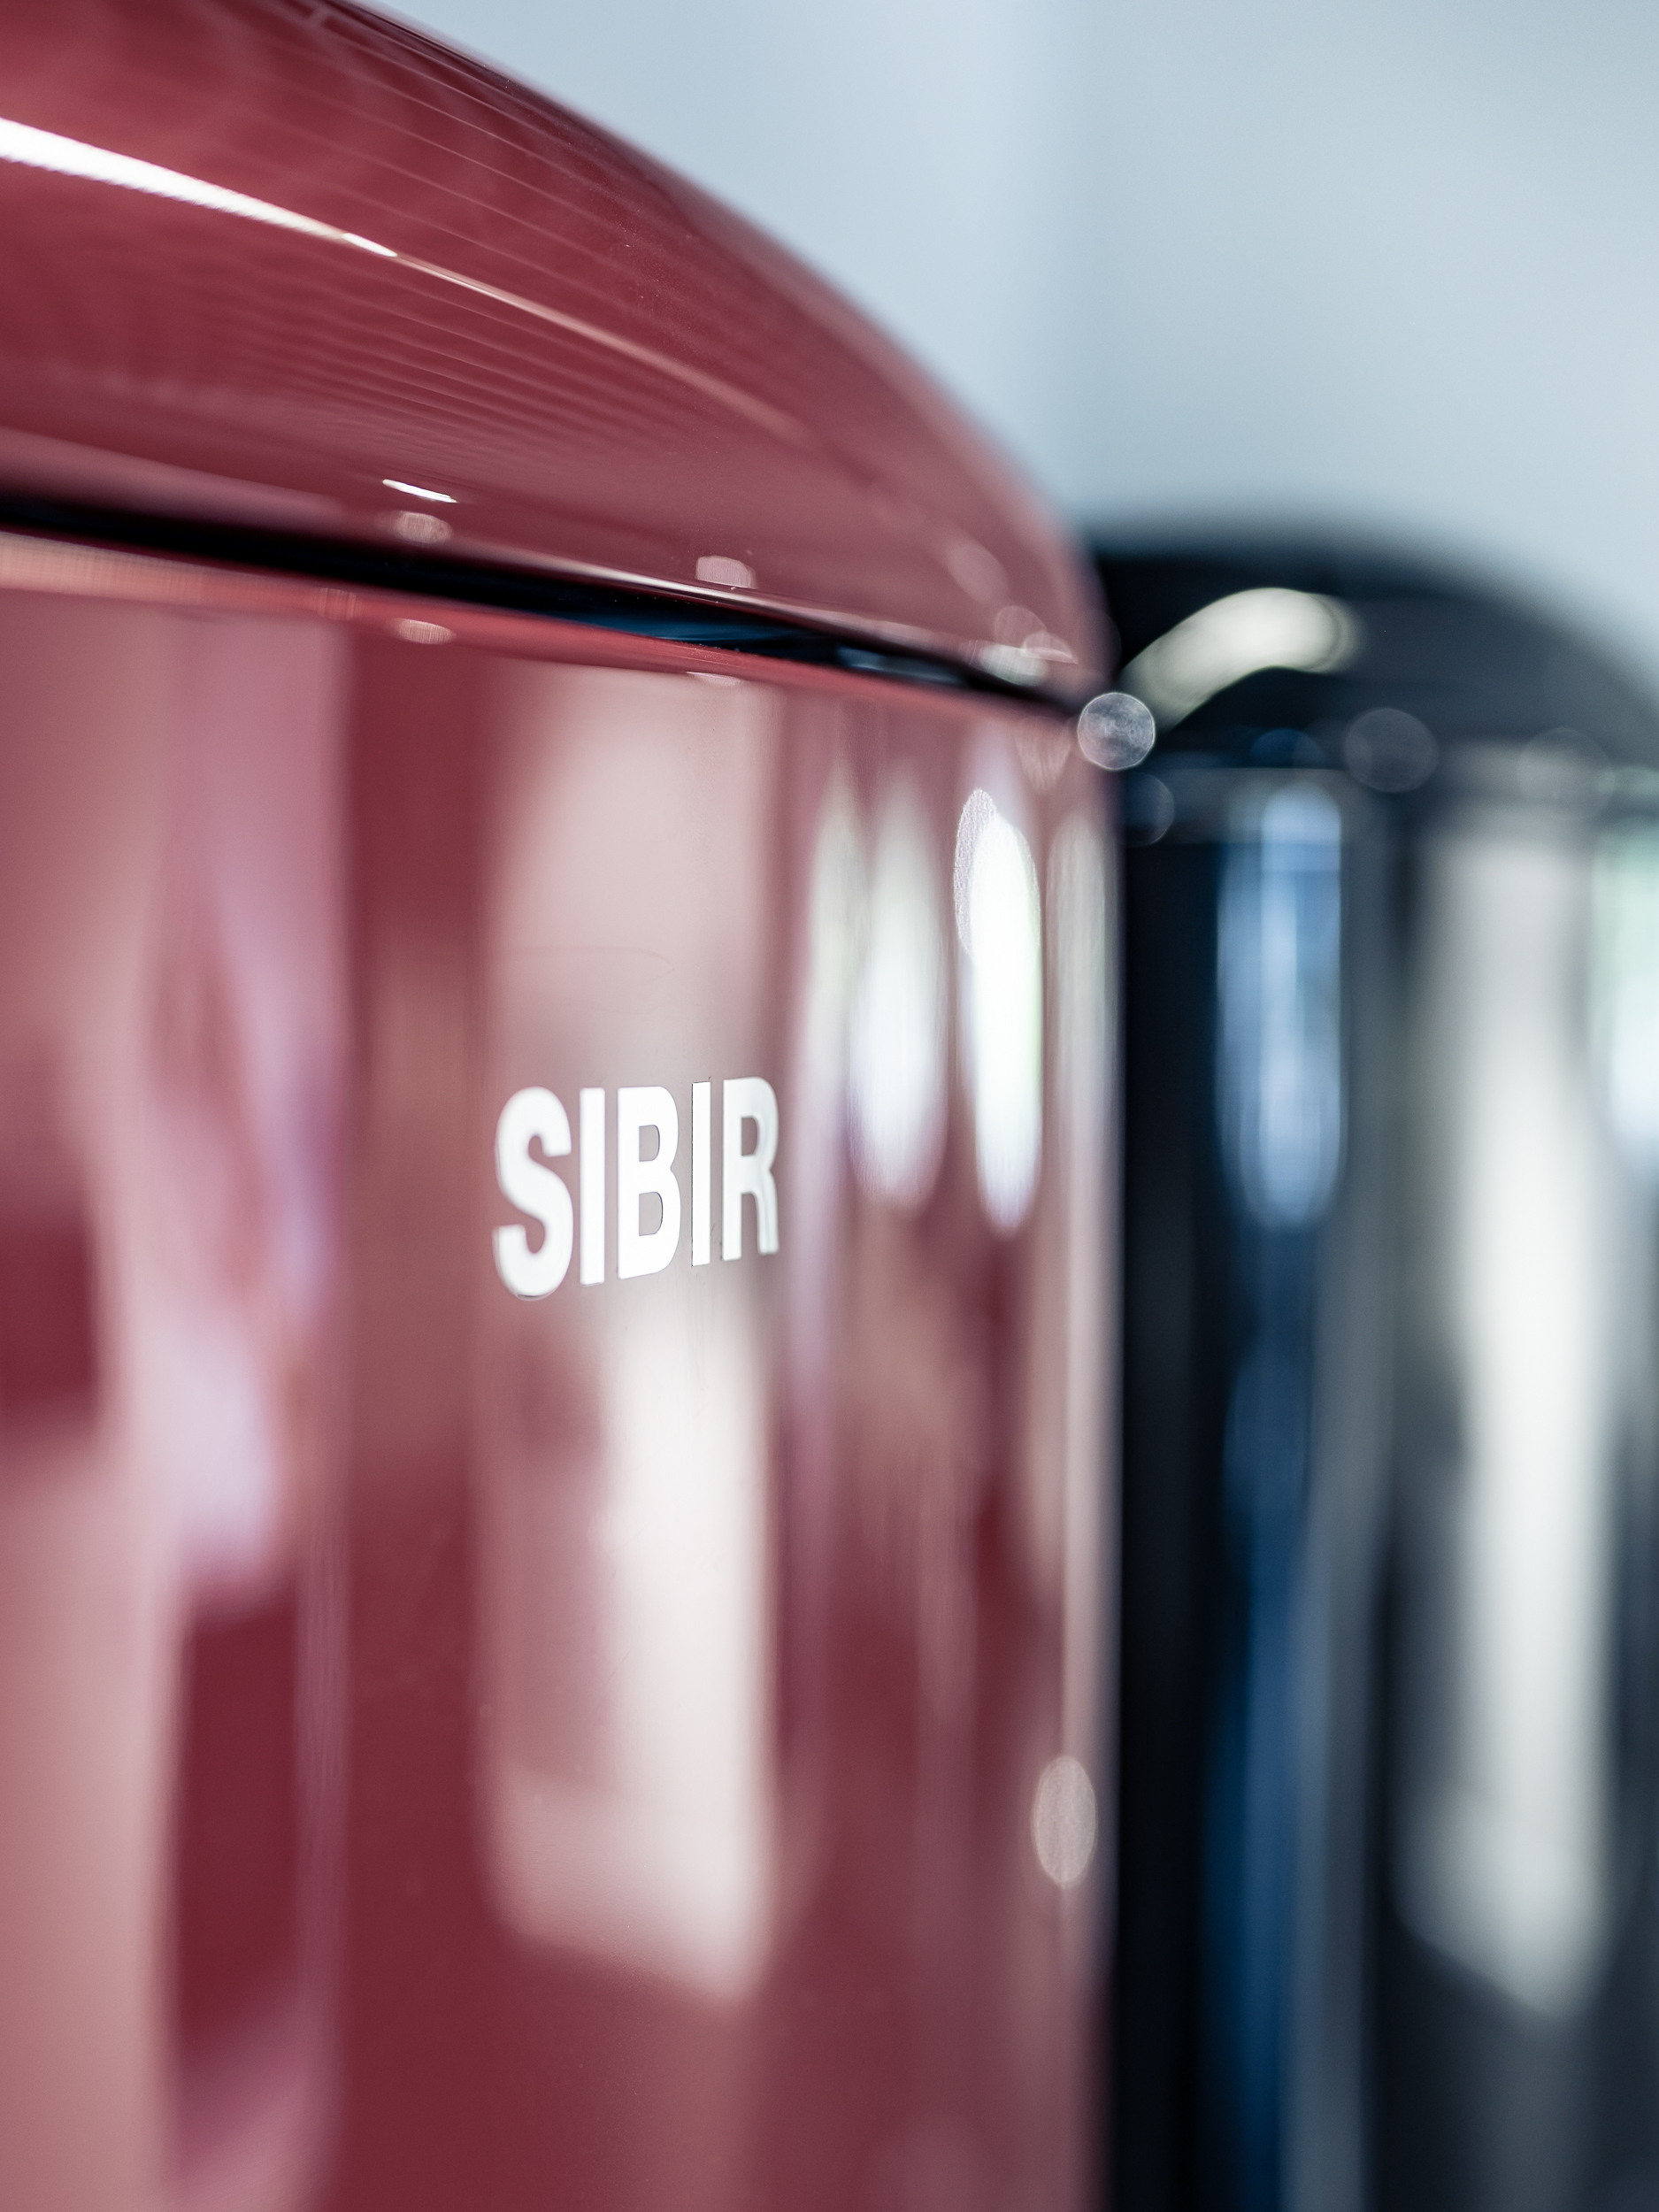 SIBIR oldtimer refrigerator bordeaux